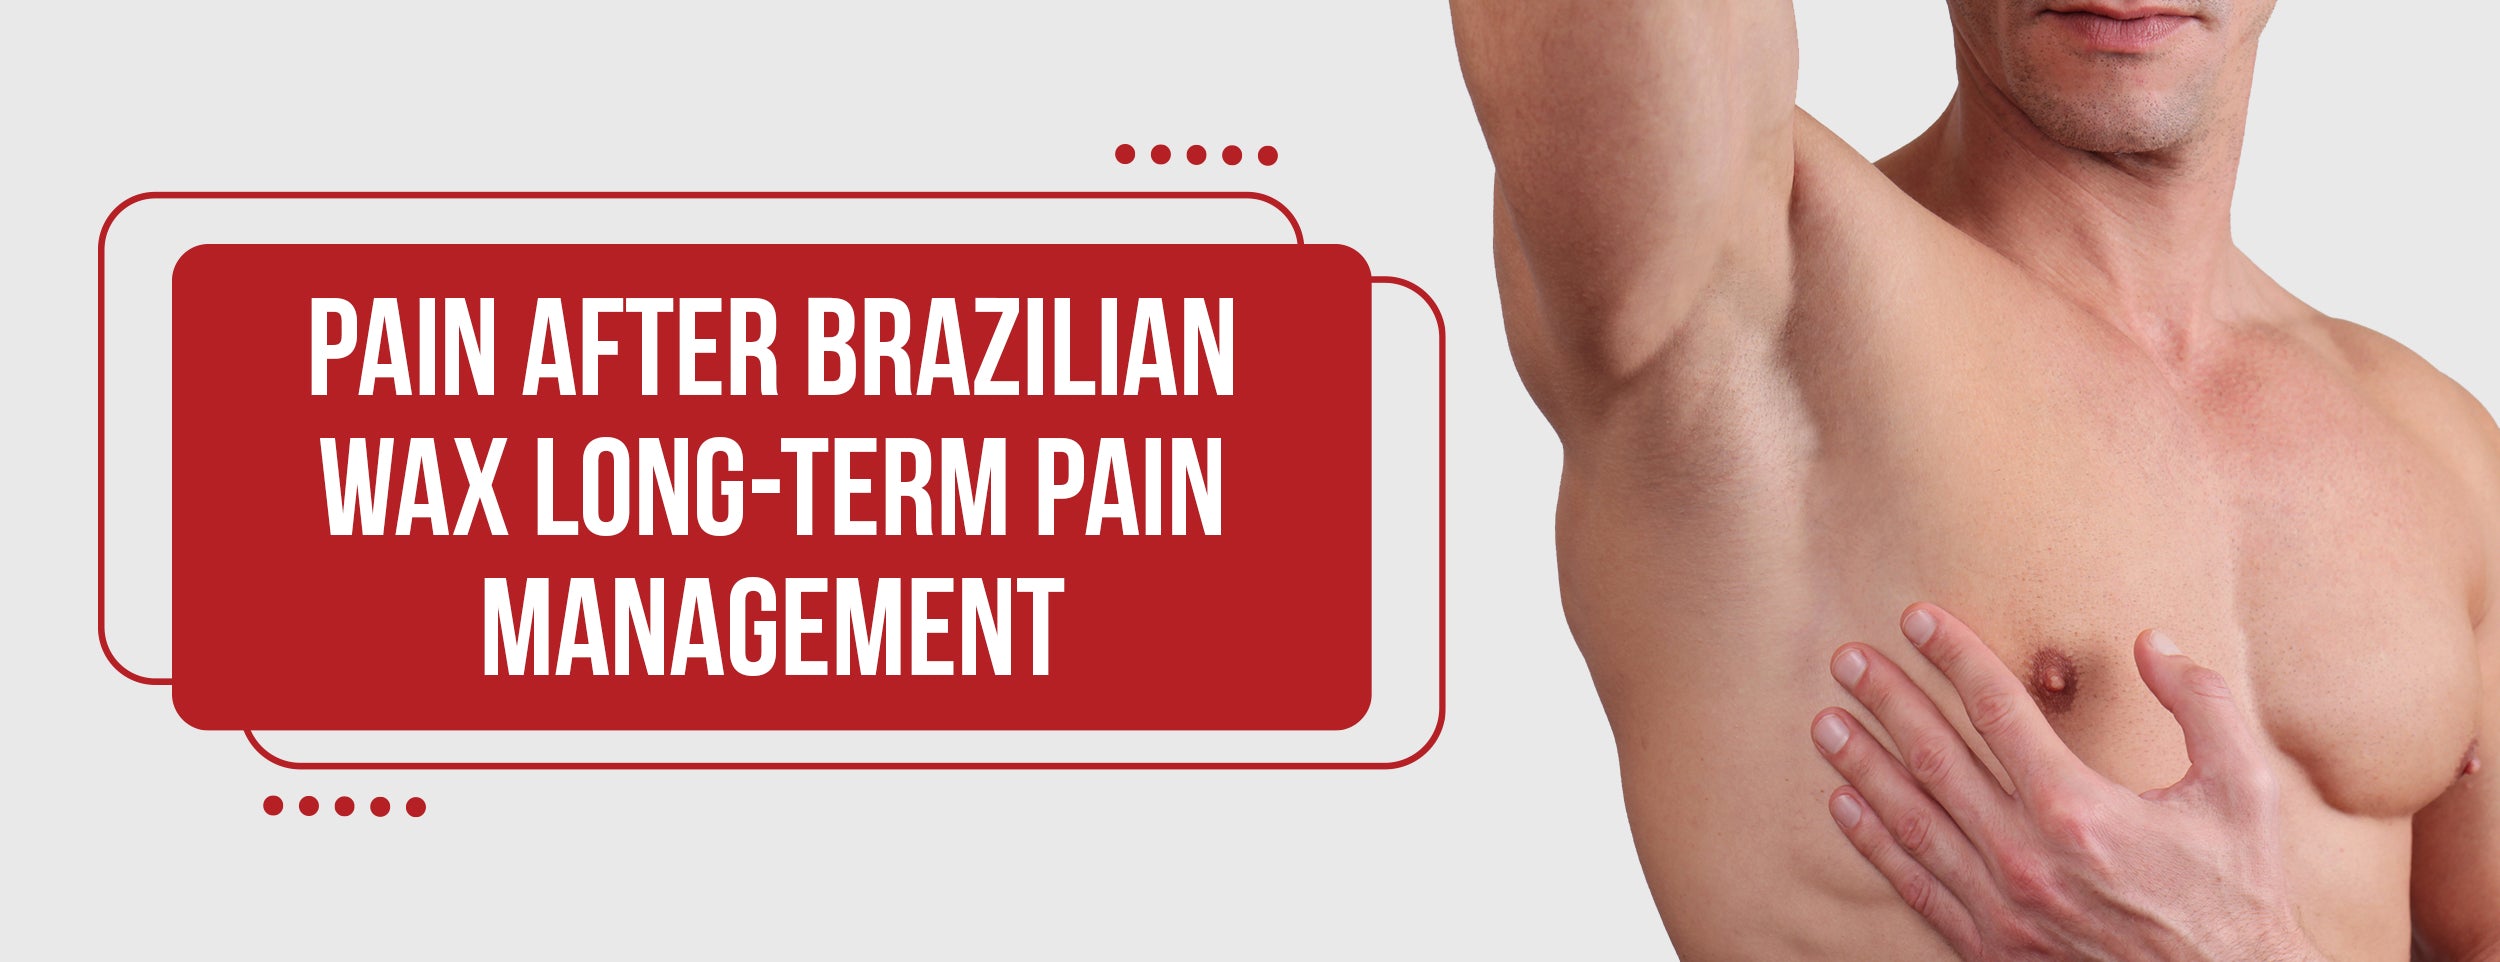 Long-Term Pain Management after Brazilian Waxing